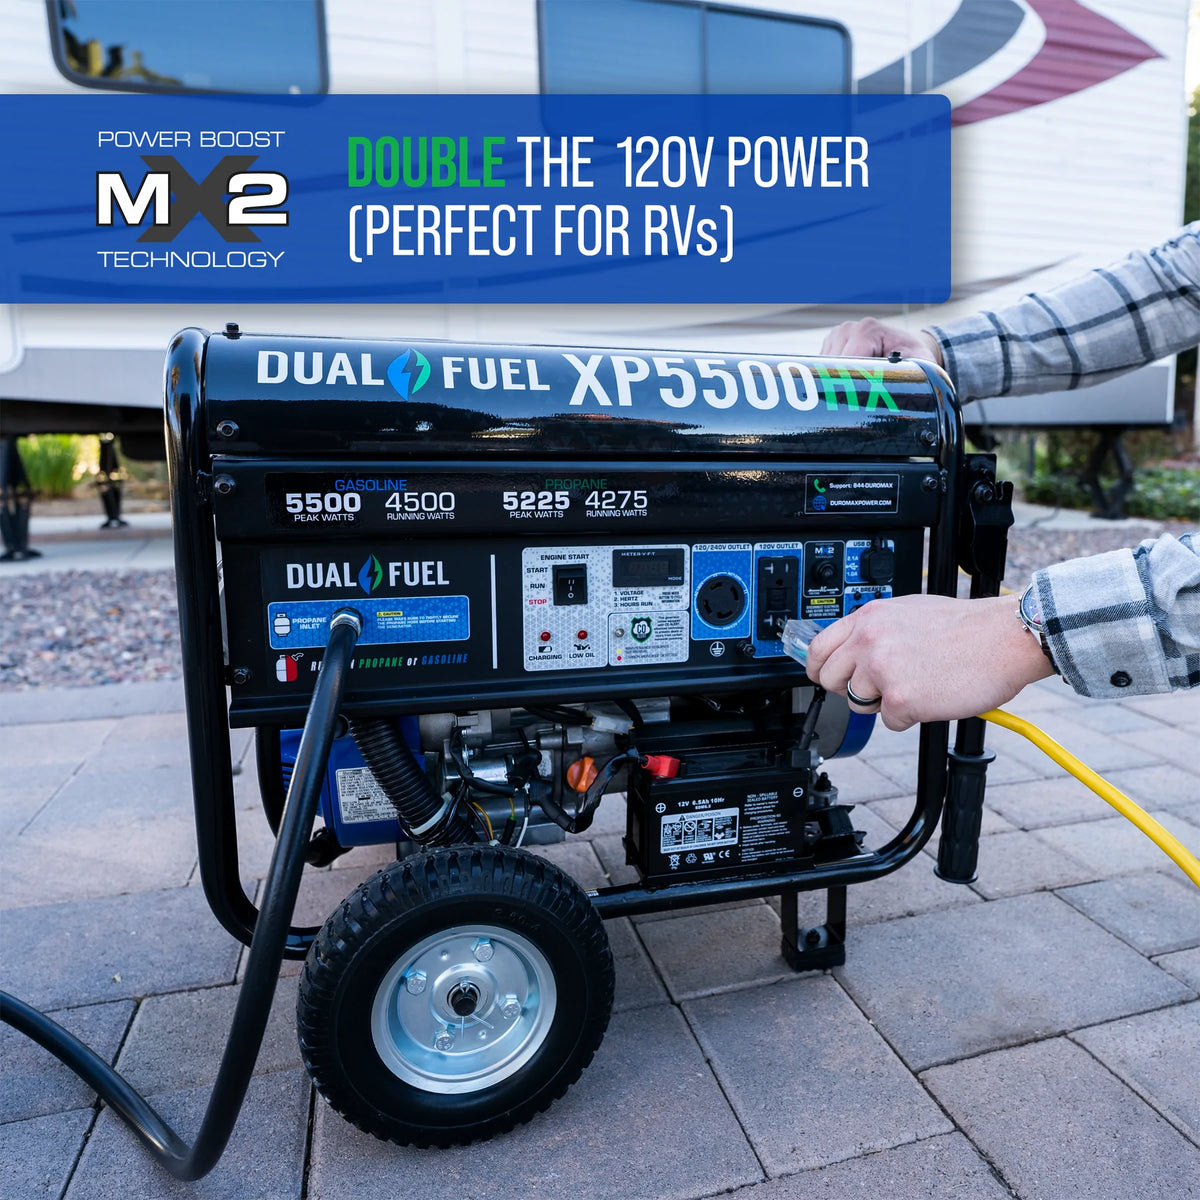 DuroMax XP5500HX 5,500-Watt/4,500-Watt 210Vcc Electric Start Dual Fuel Portable Generator with CO Alert